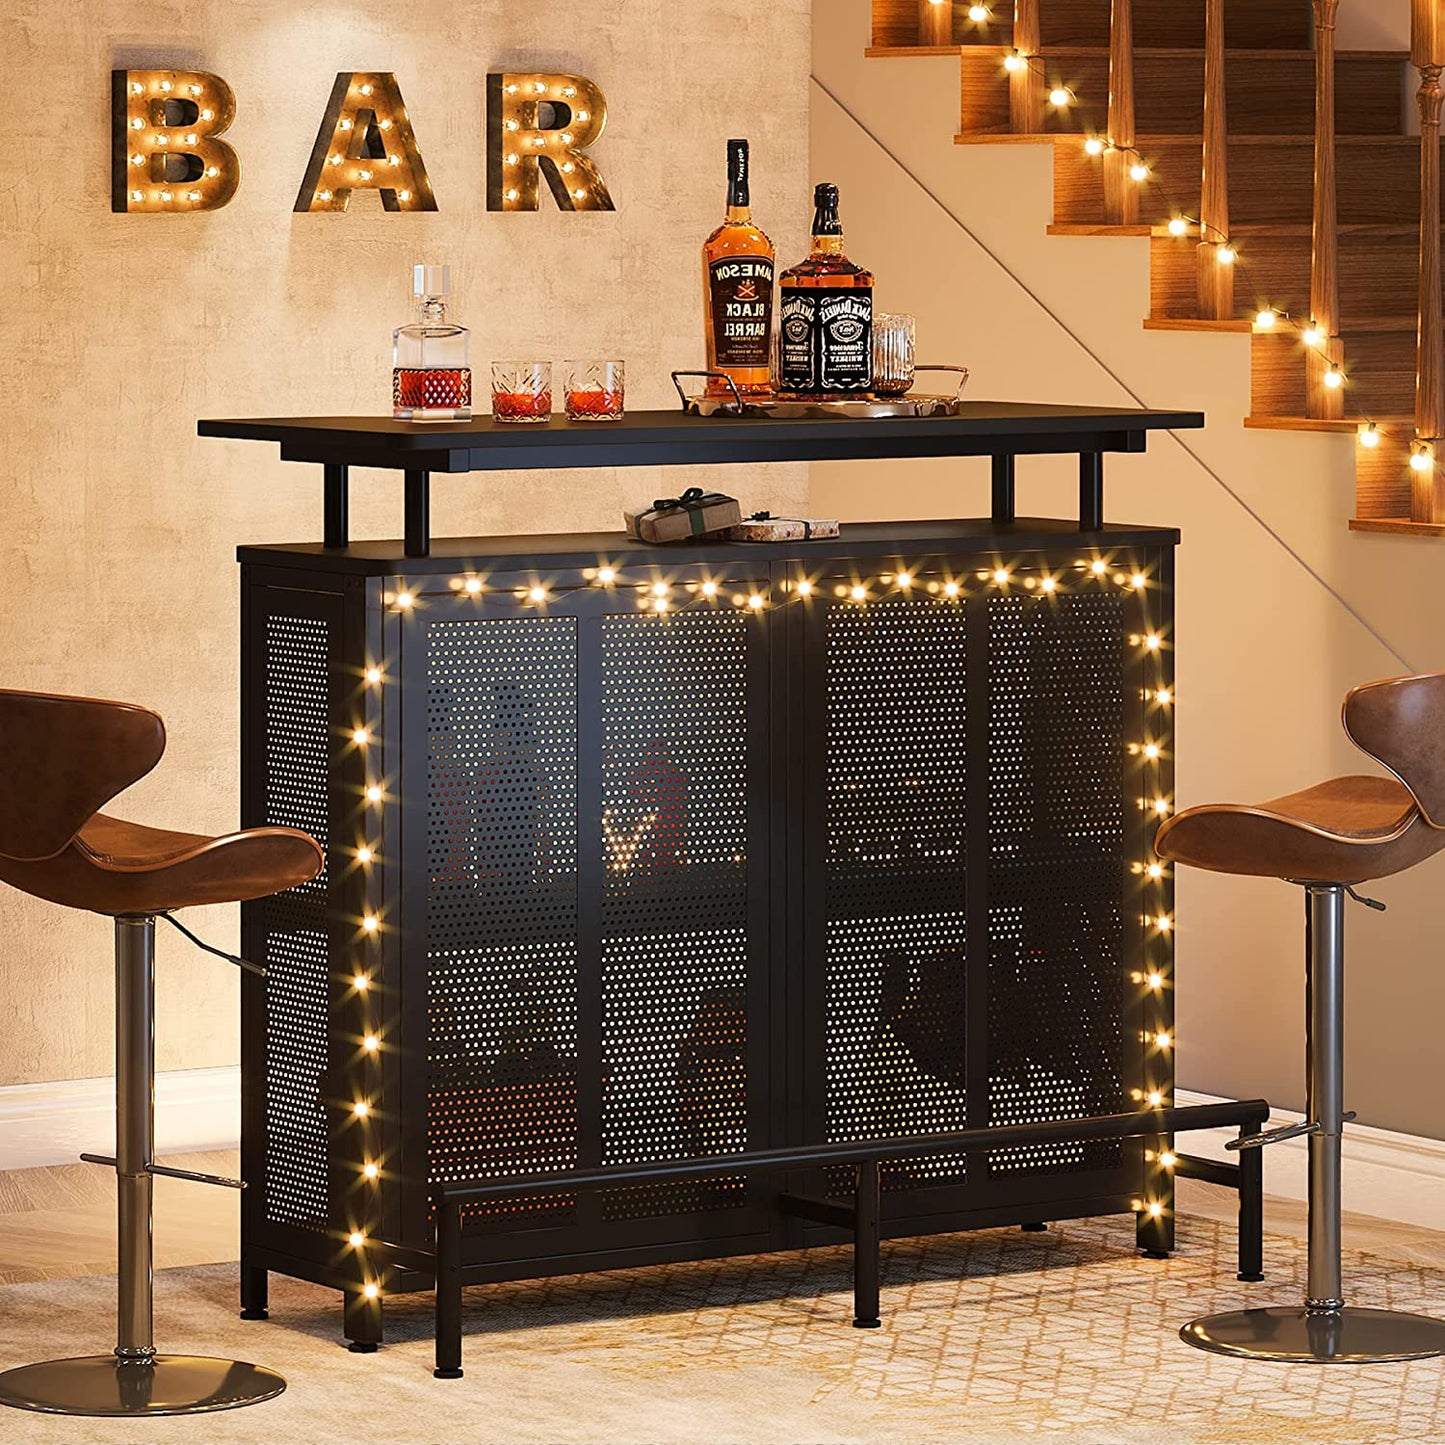 Home Bar Unit, 3 Tier Liquor Bar Table with Stemware Racks and Wine Storage Shelves, Wine Bar Cabinet Mini Bar for Home Kitchen Pub (Black)